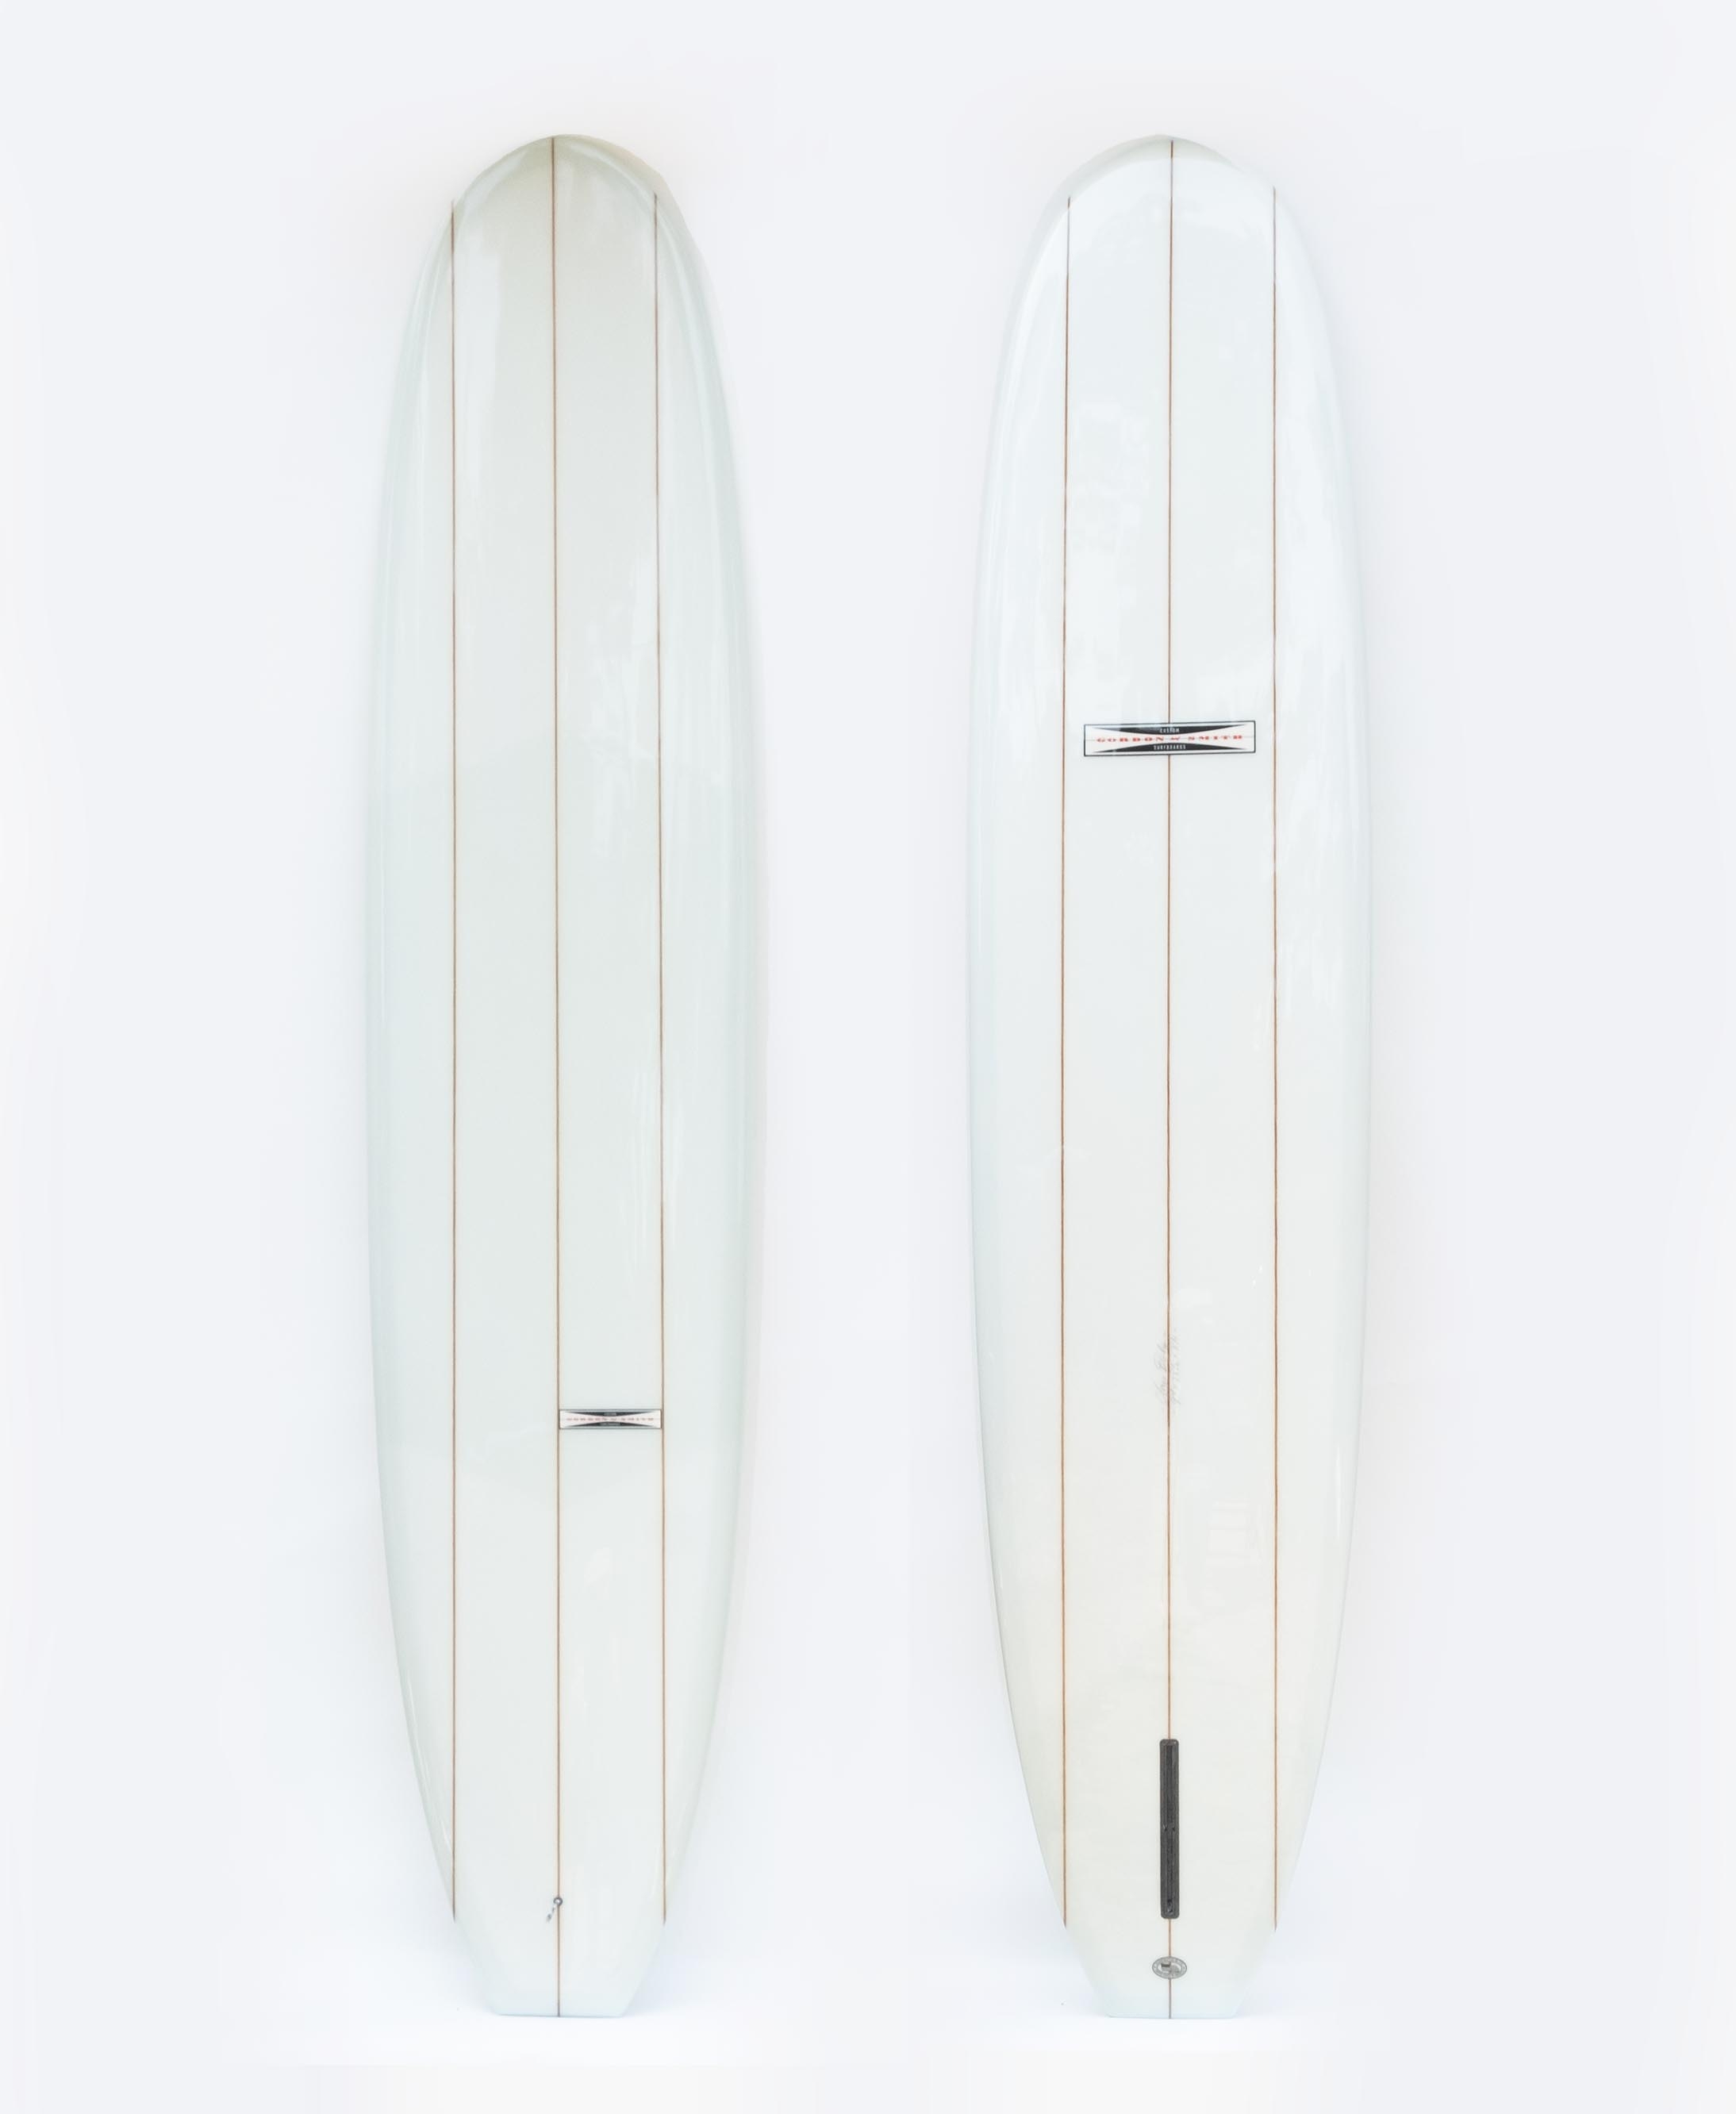 Gordon & Smith Surfboards - The Noserider II 9'4